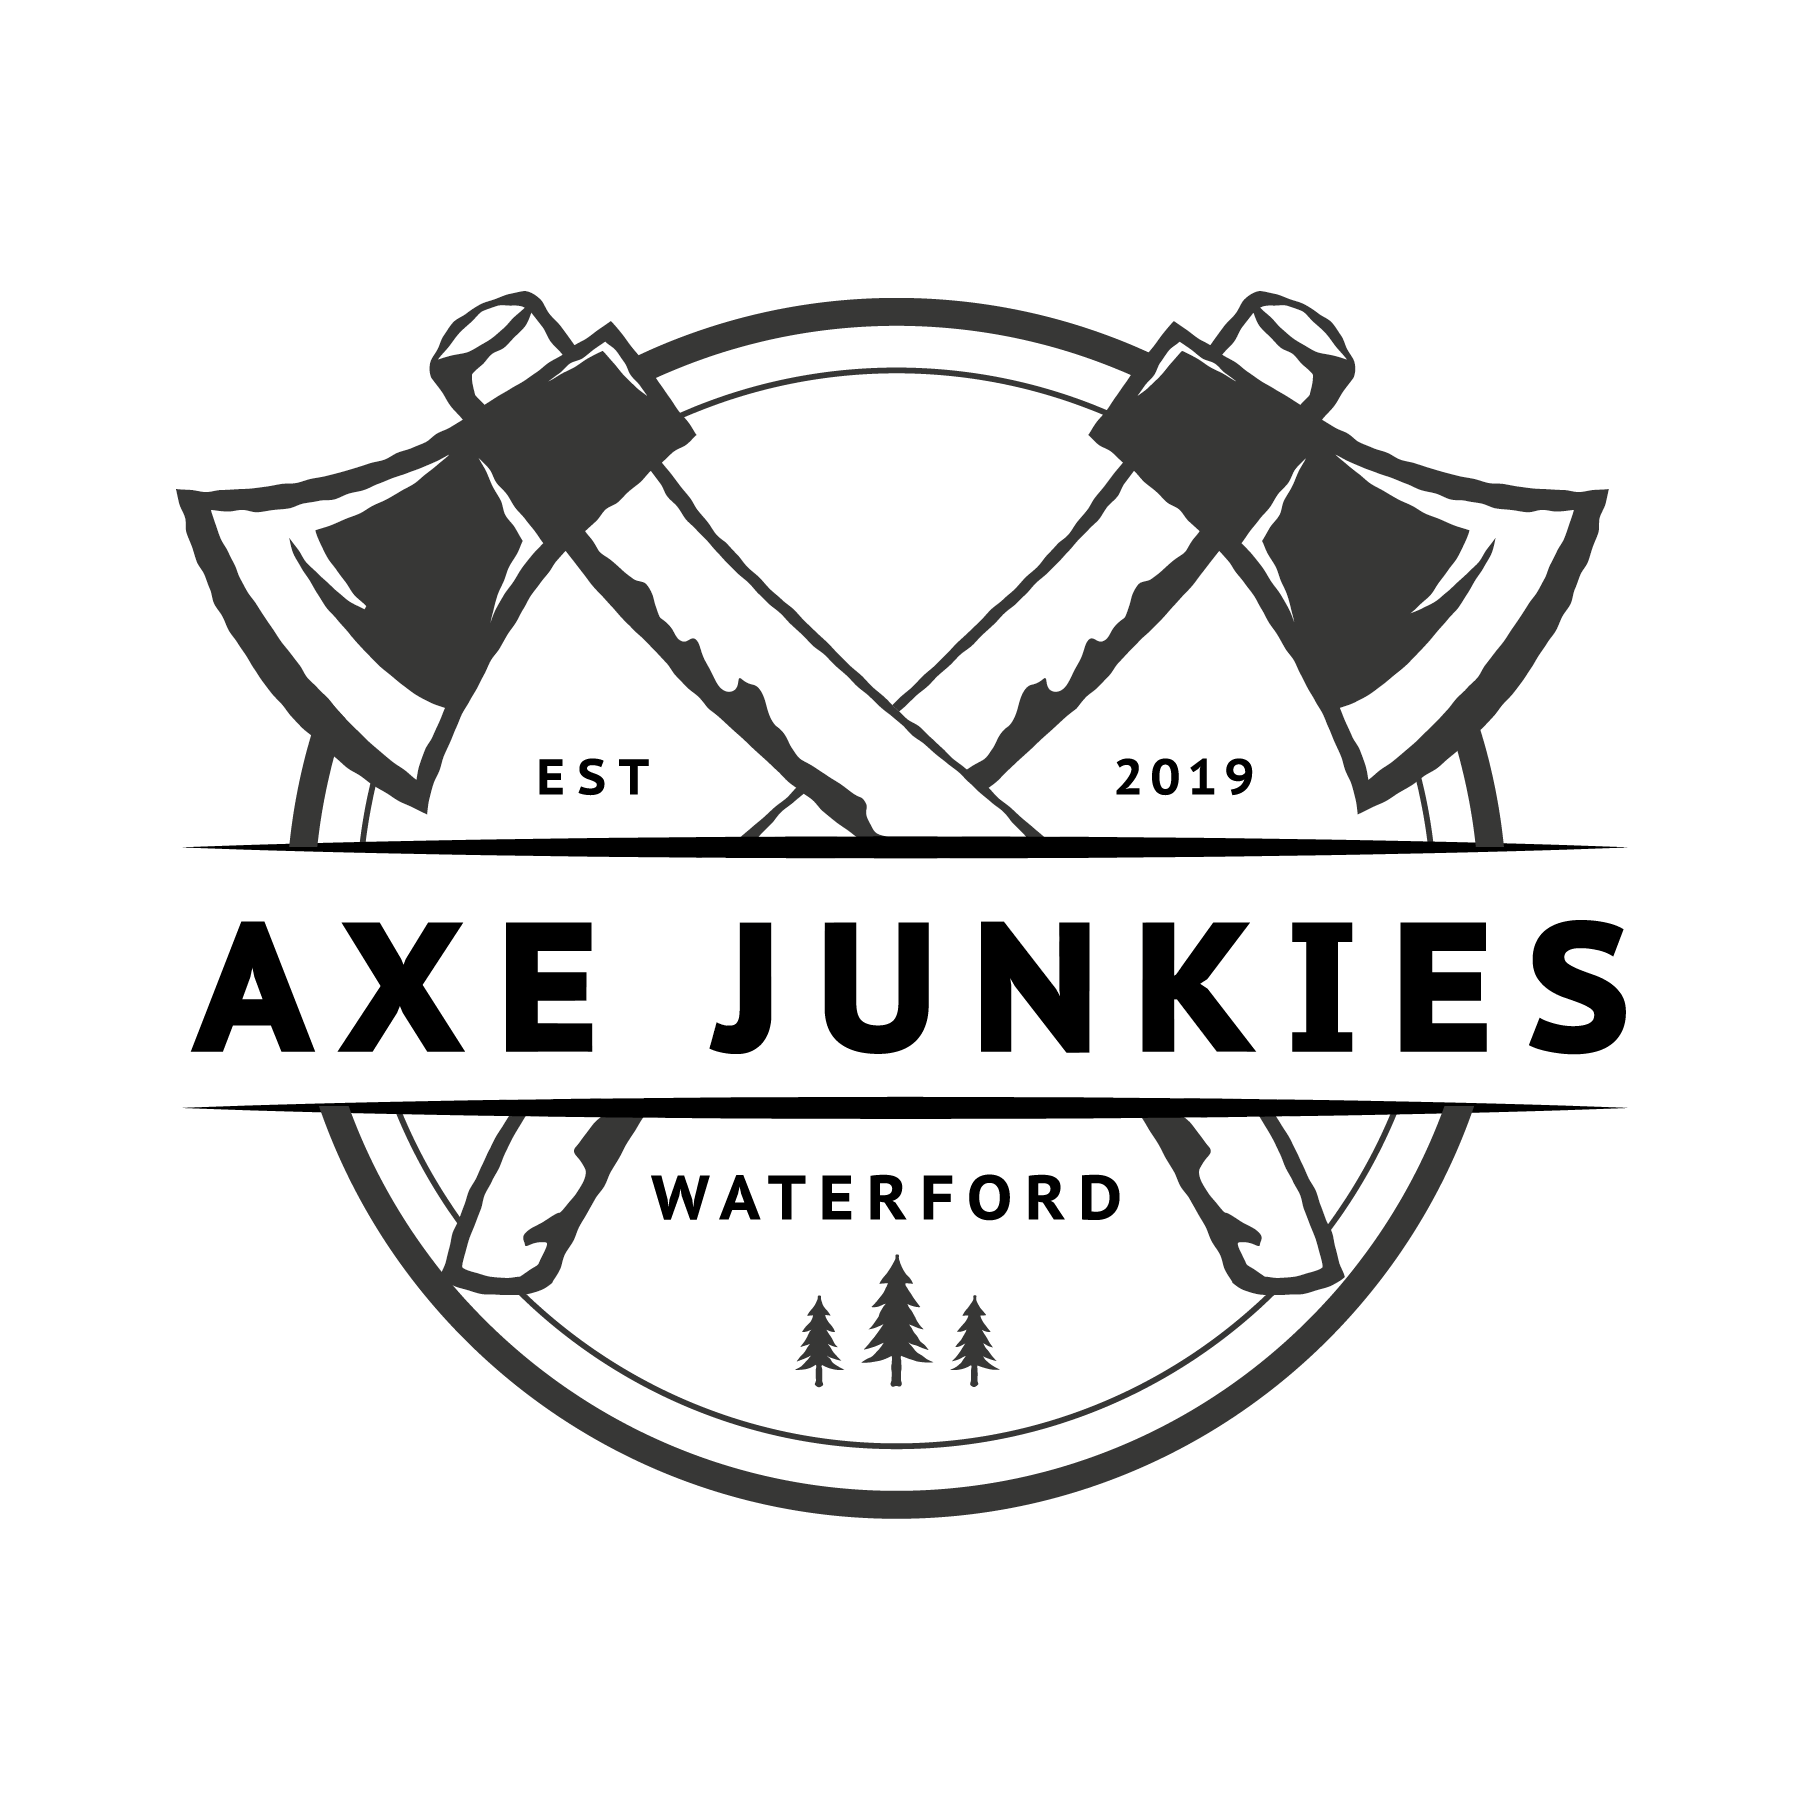 AXE JUNKIES Waterford Logo - Urban Axe Throwing